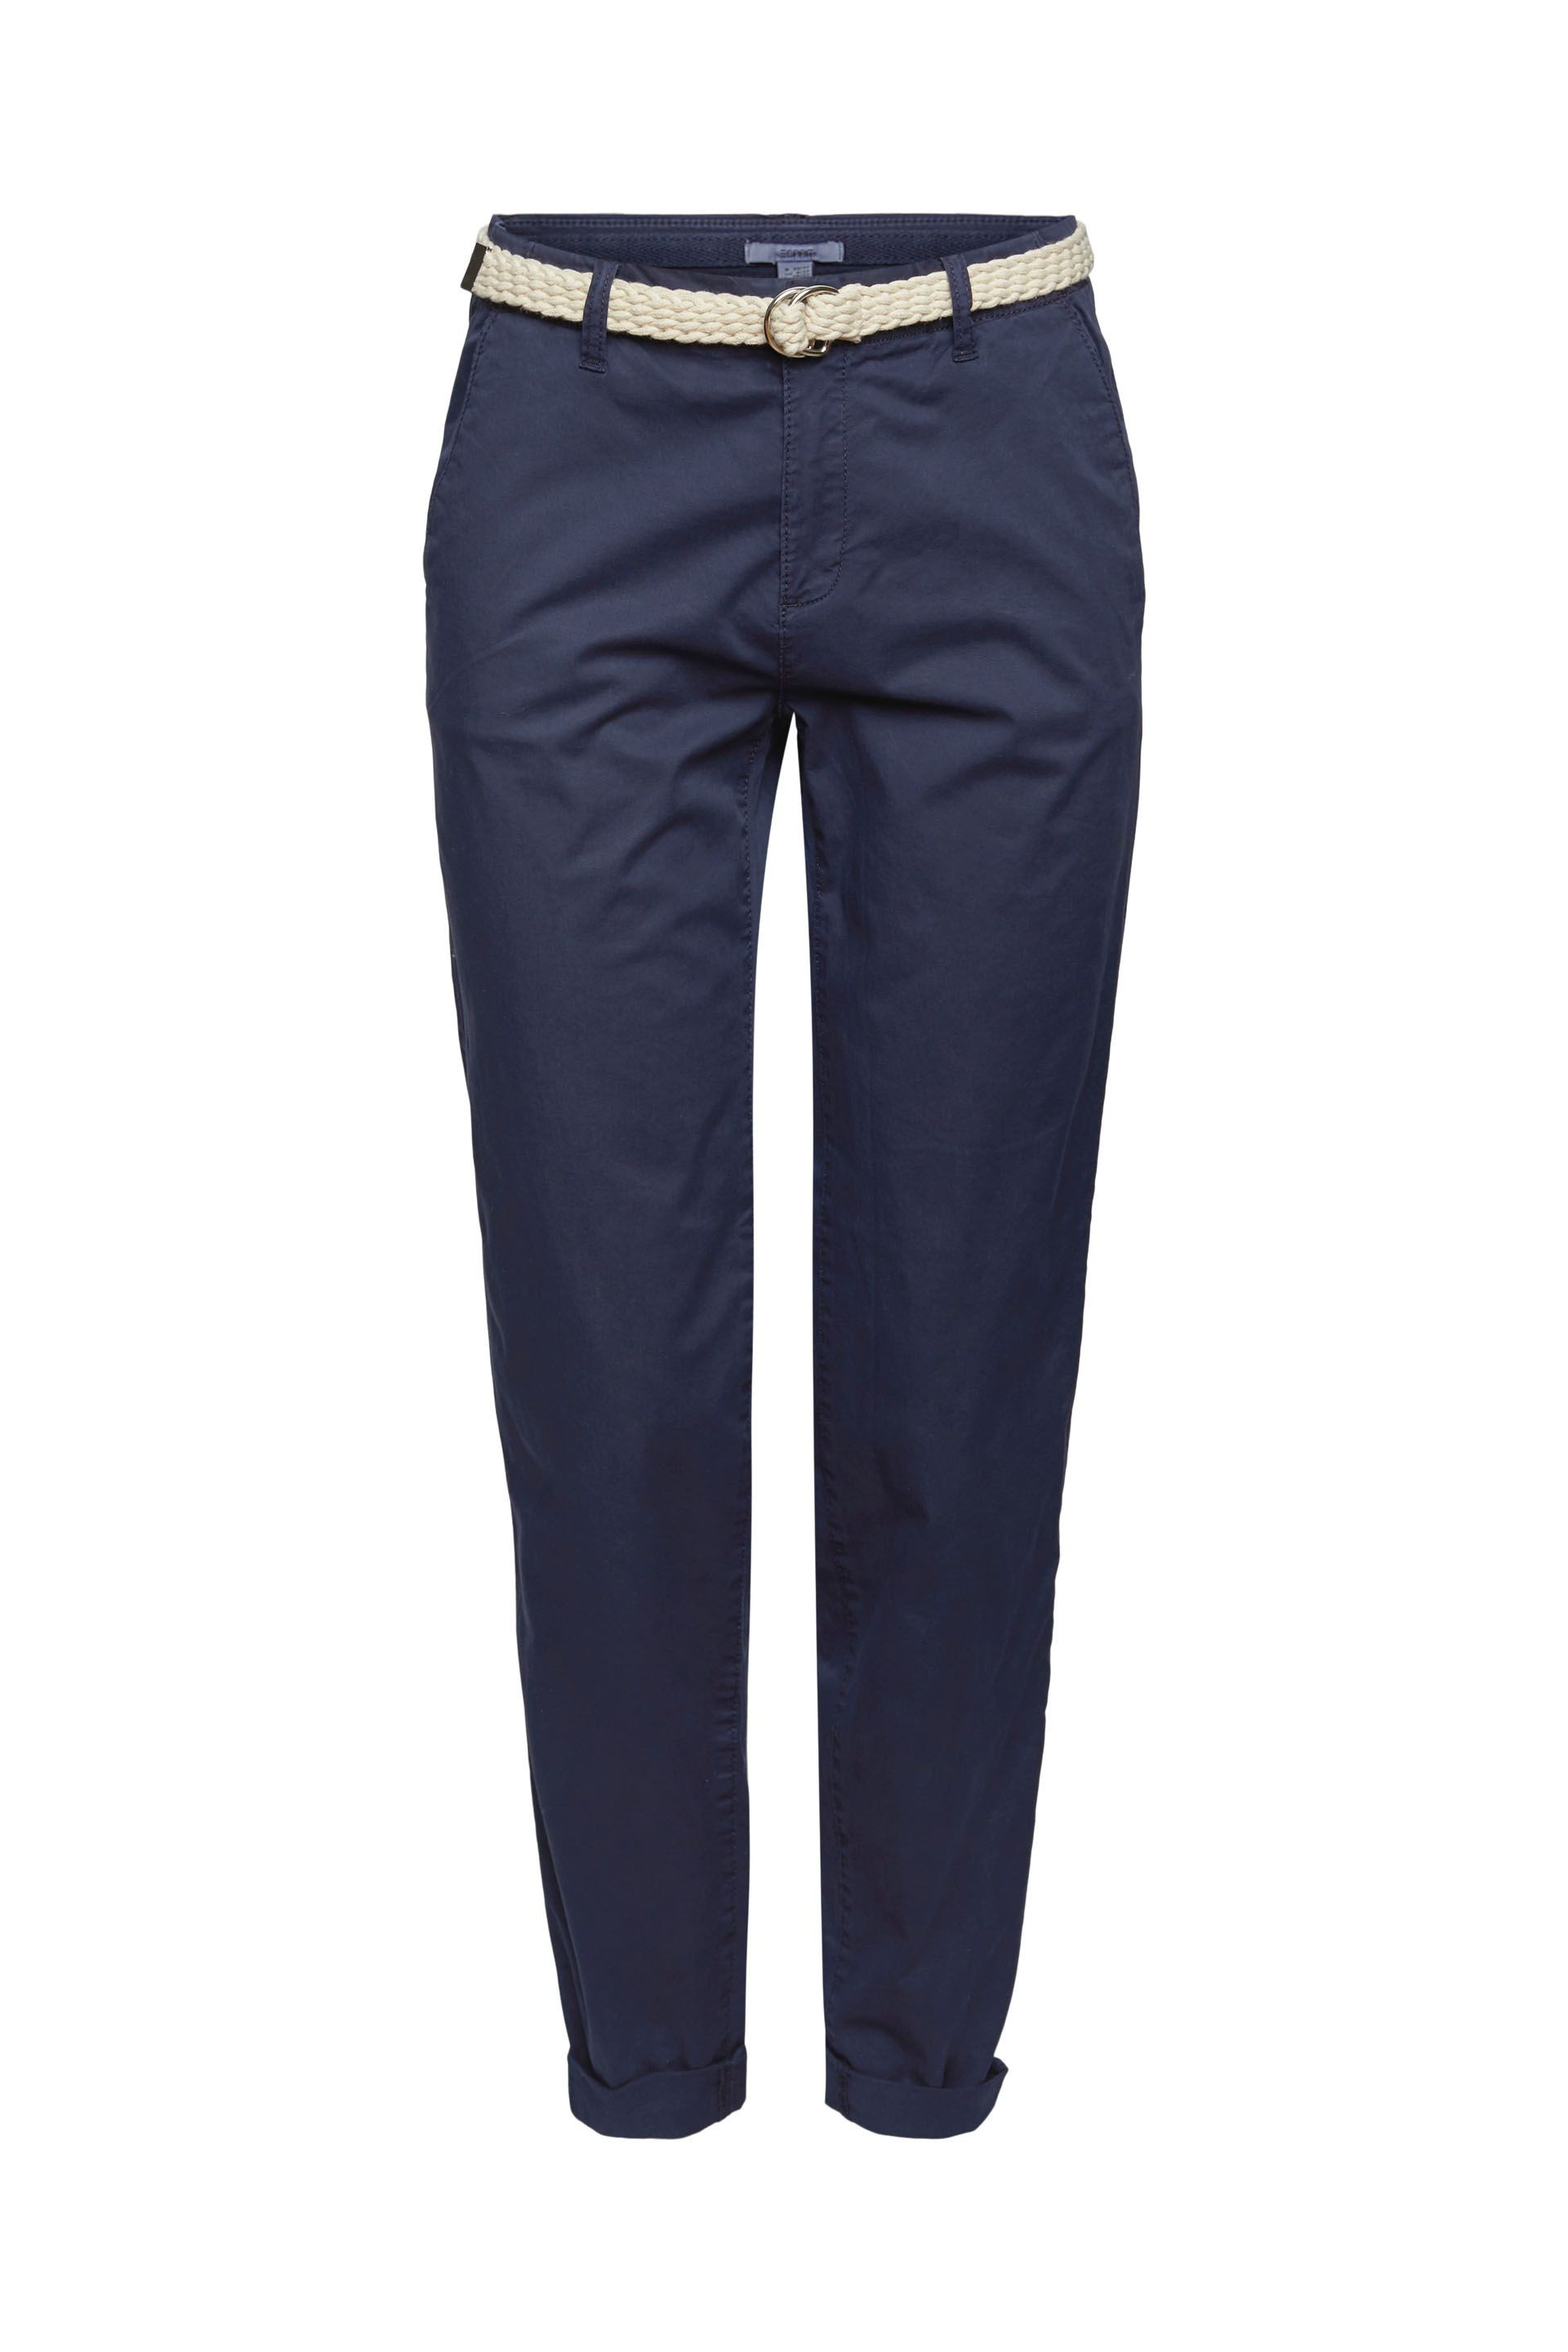 Pantaloni chino con cintura intrecciata, Blu, large image number 0